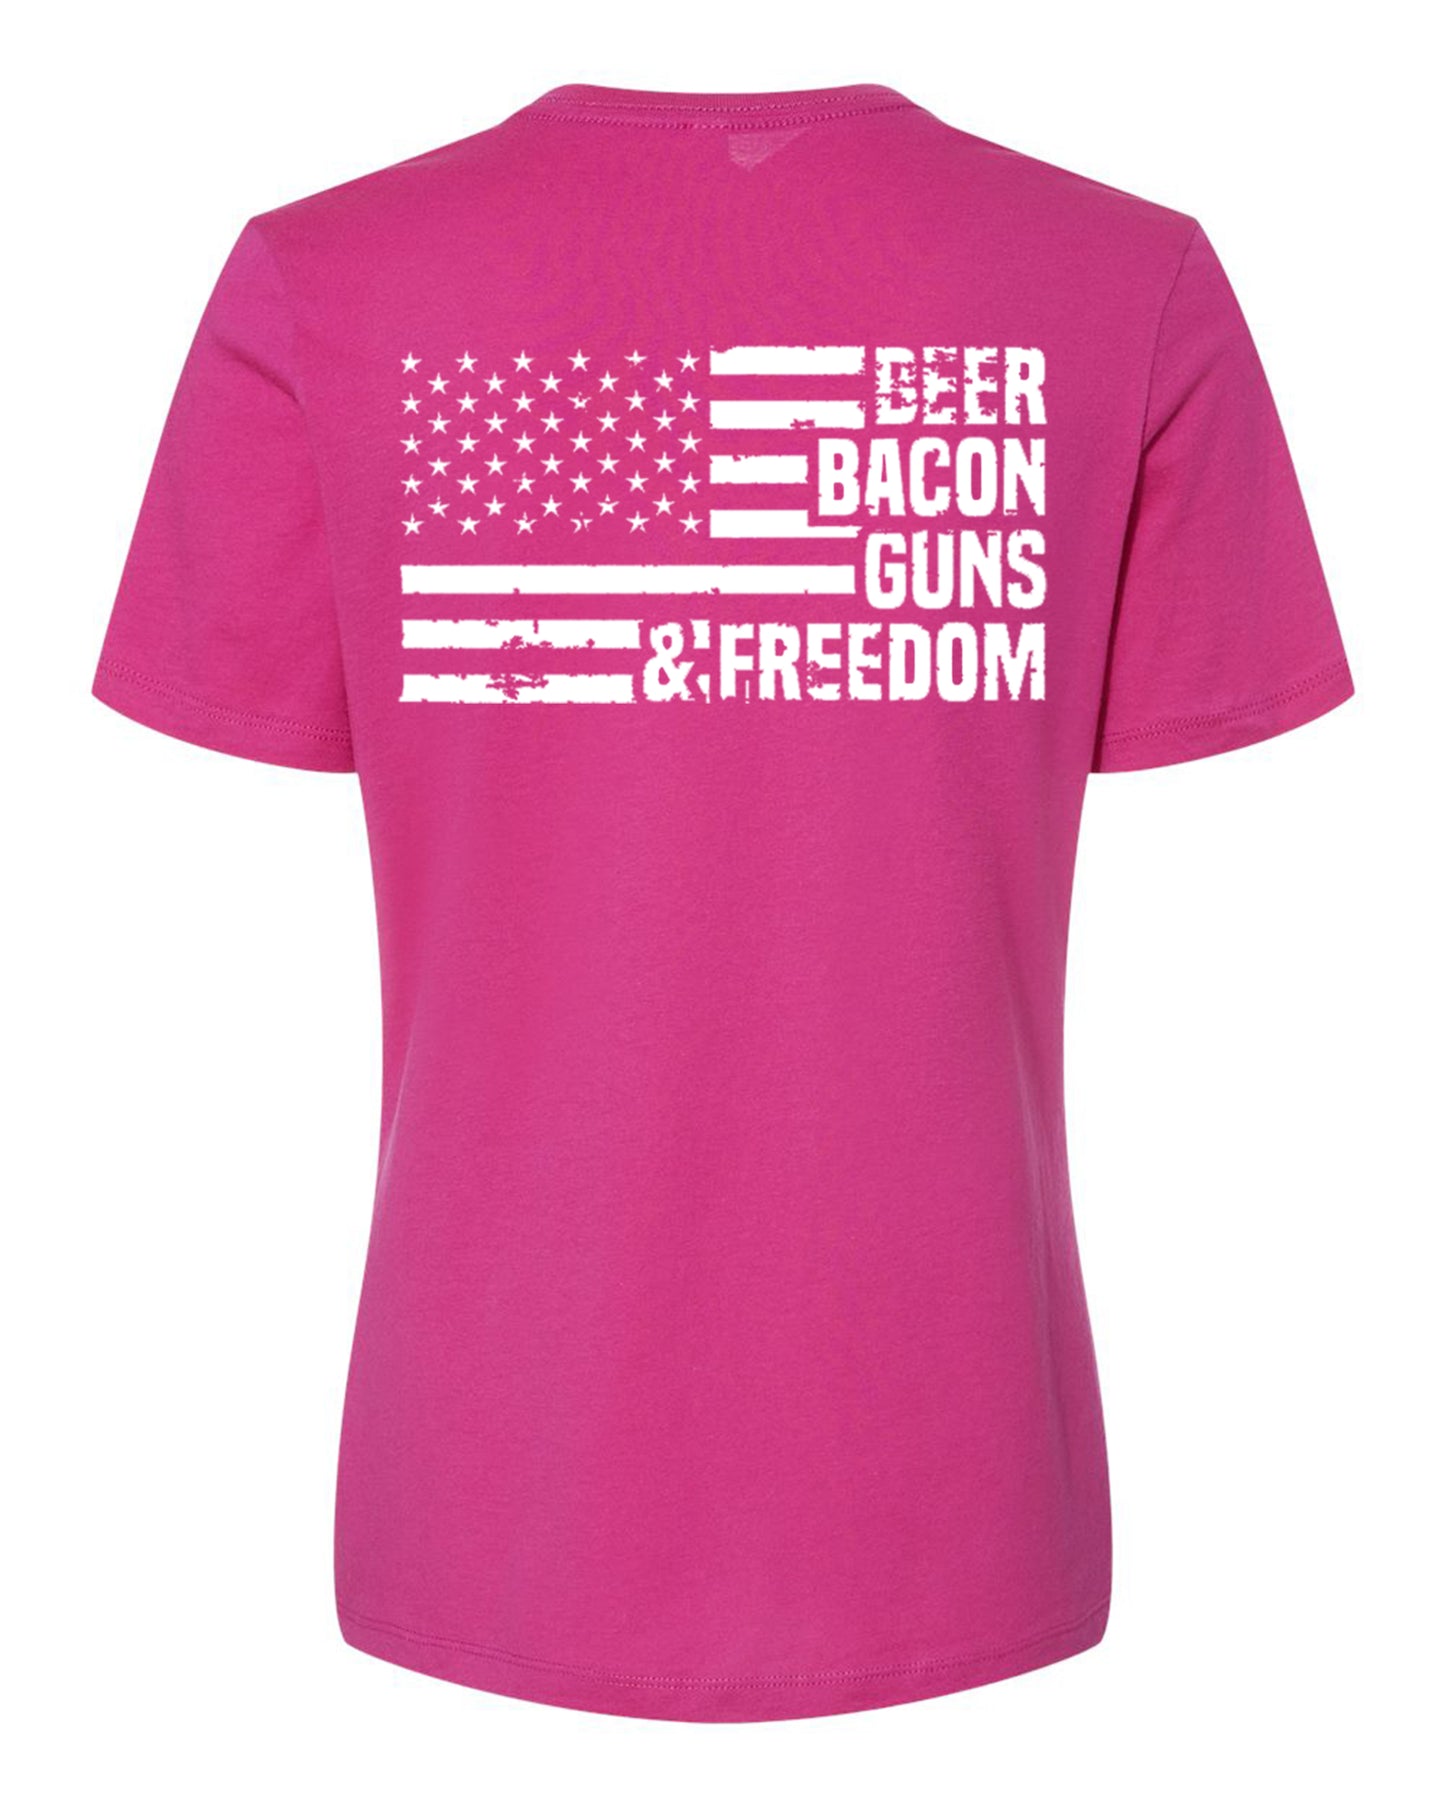 Beer Bacon Guns & Freedom